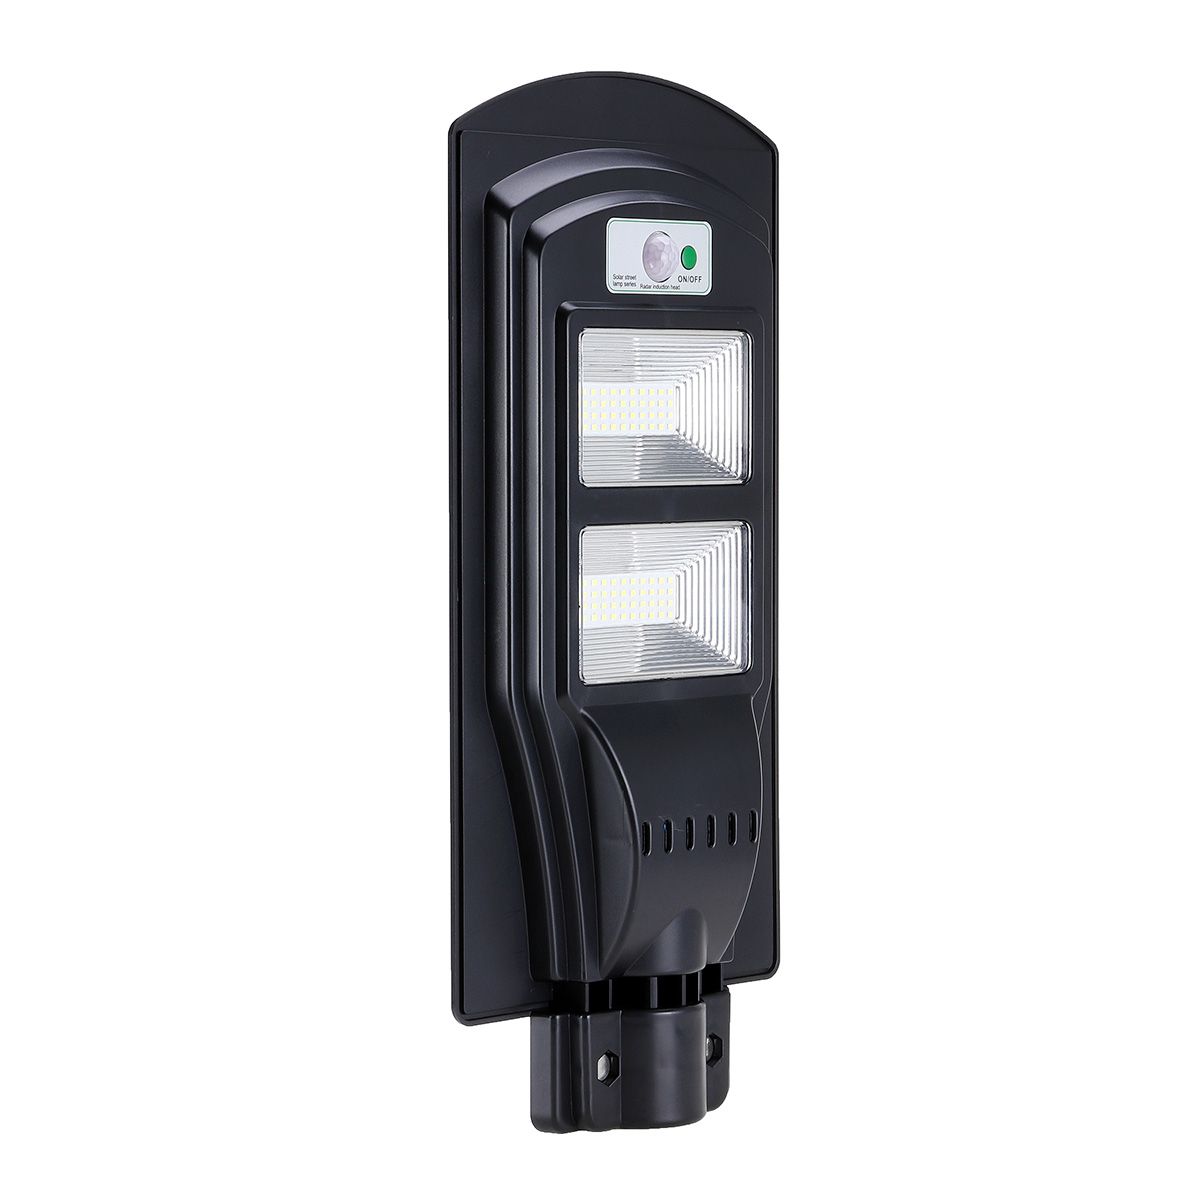 40W-Solar-Street-Light-Outdoor-with-PIR-Motion-Sensor-Waterproof-LED-Wall-Lights-Street-Area-Lightin-1640550